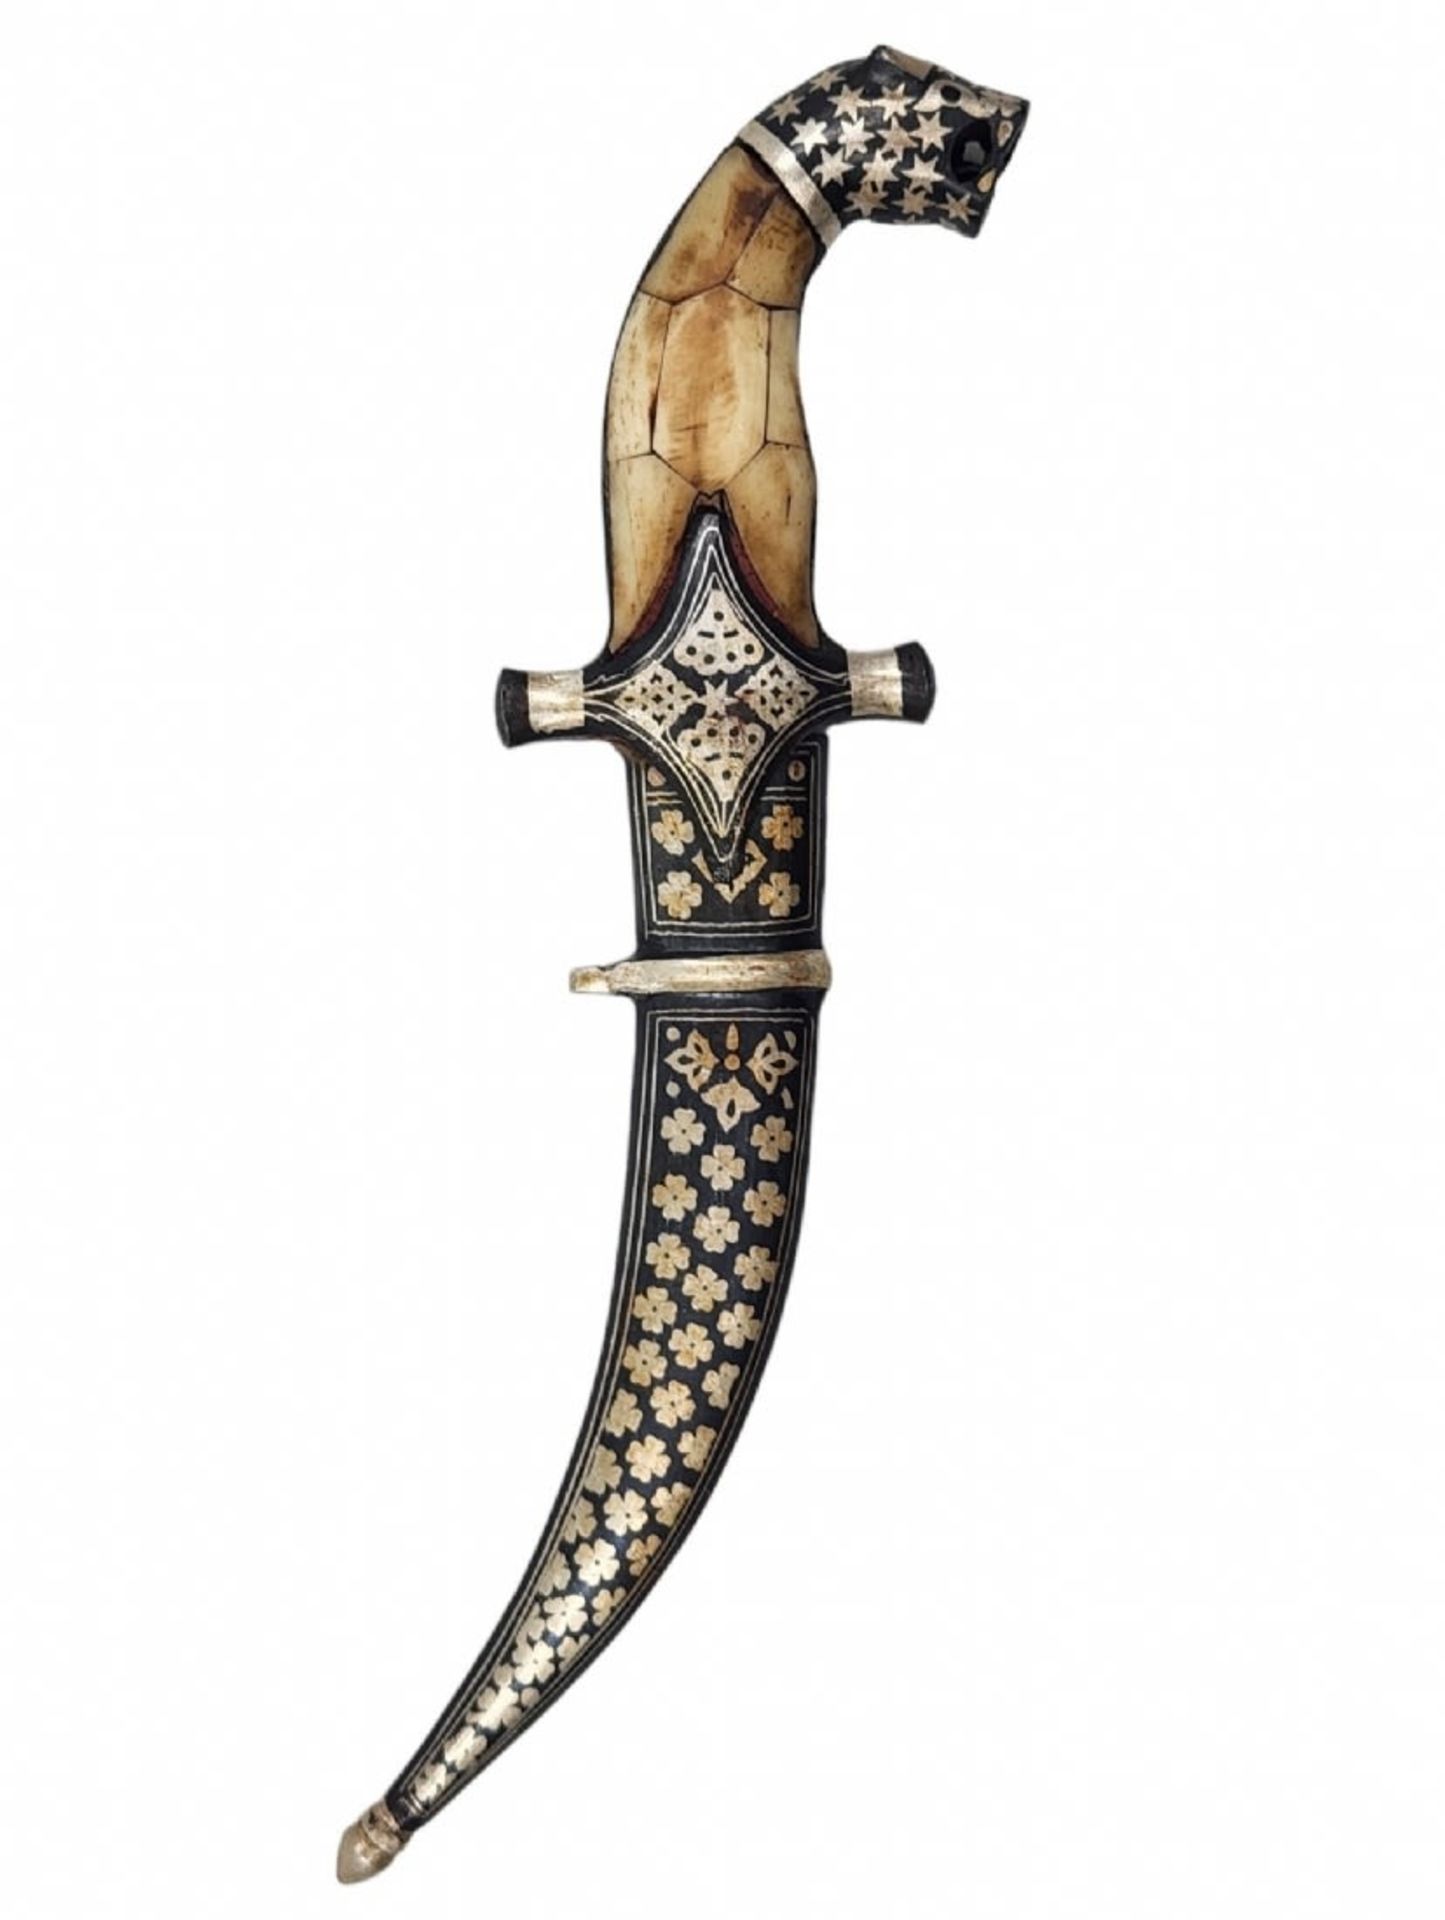 Decorative dagger, made of metal and bone. Length: 26 cm. Width: 9 cm. Period: 20th century